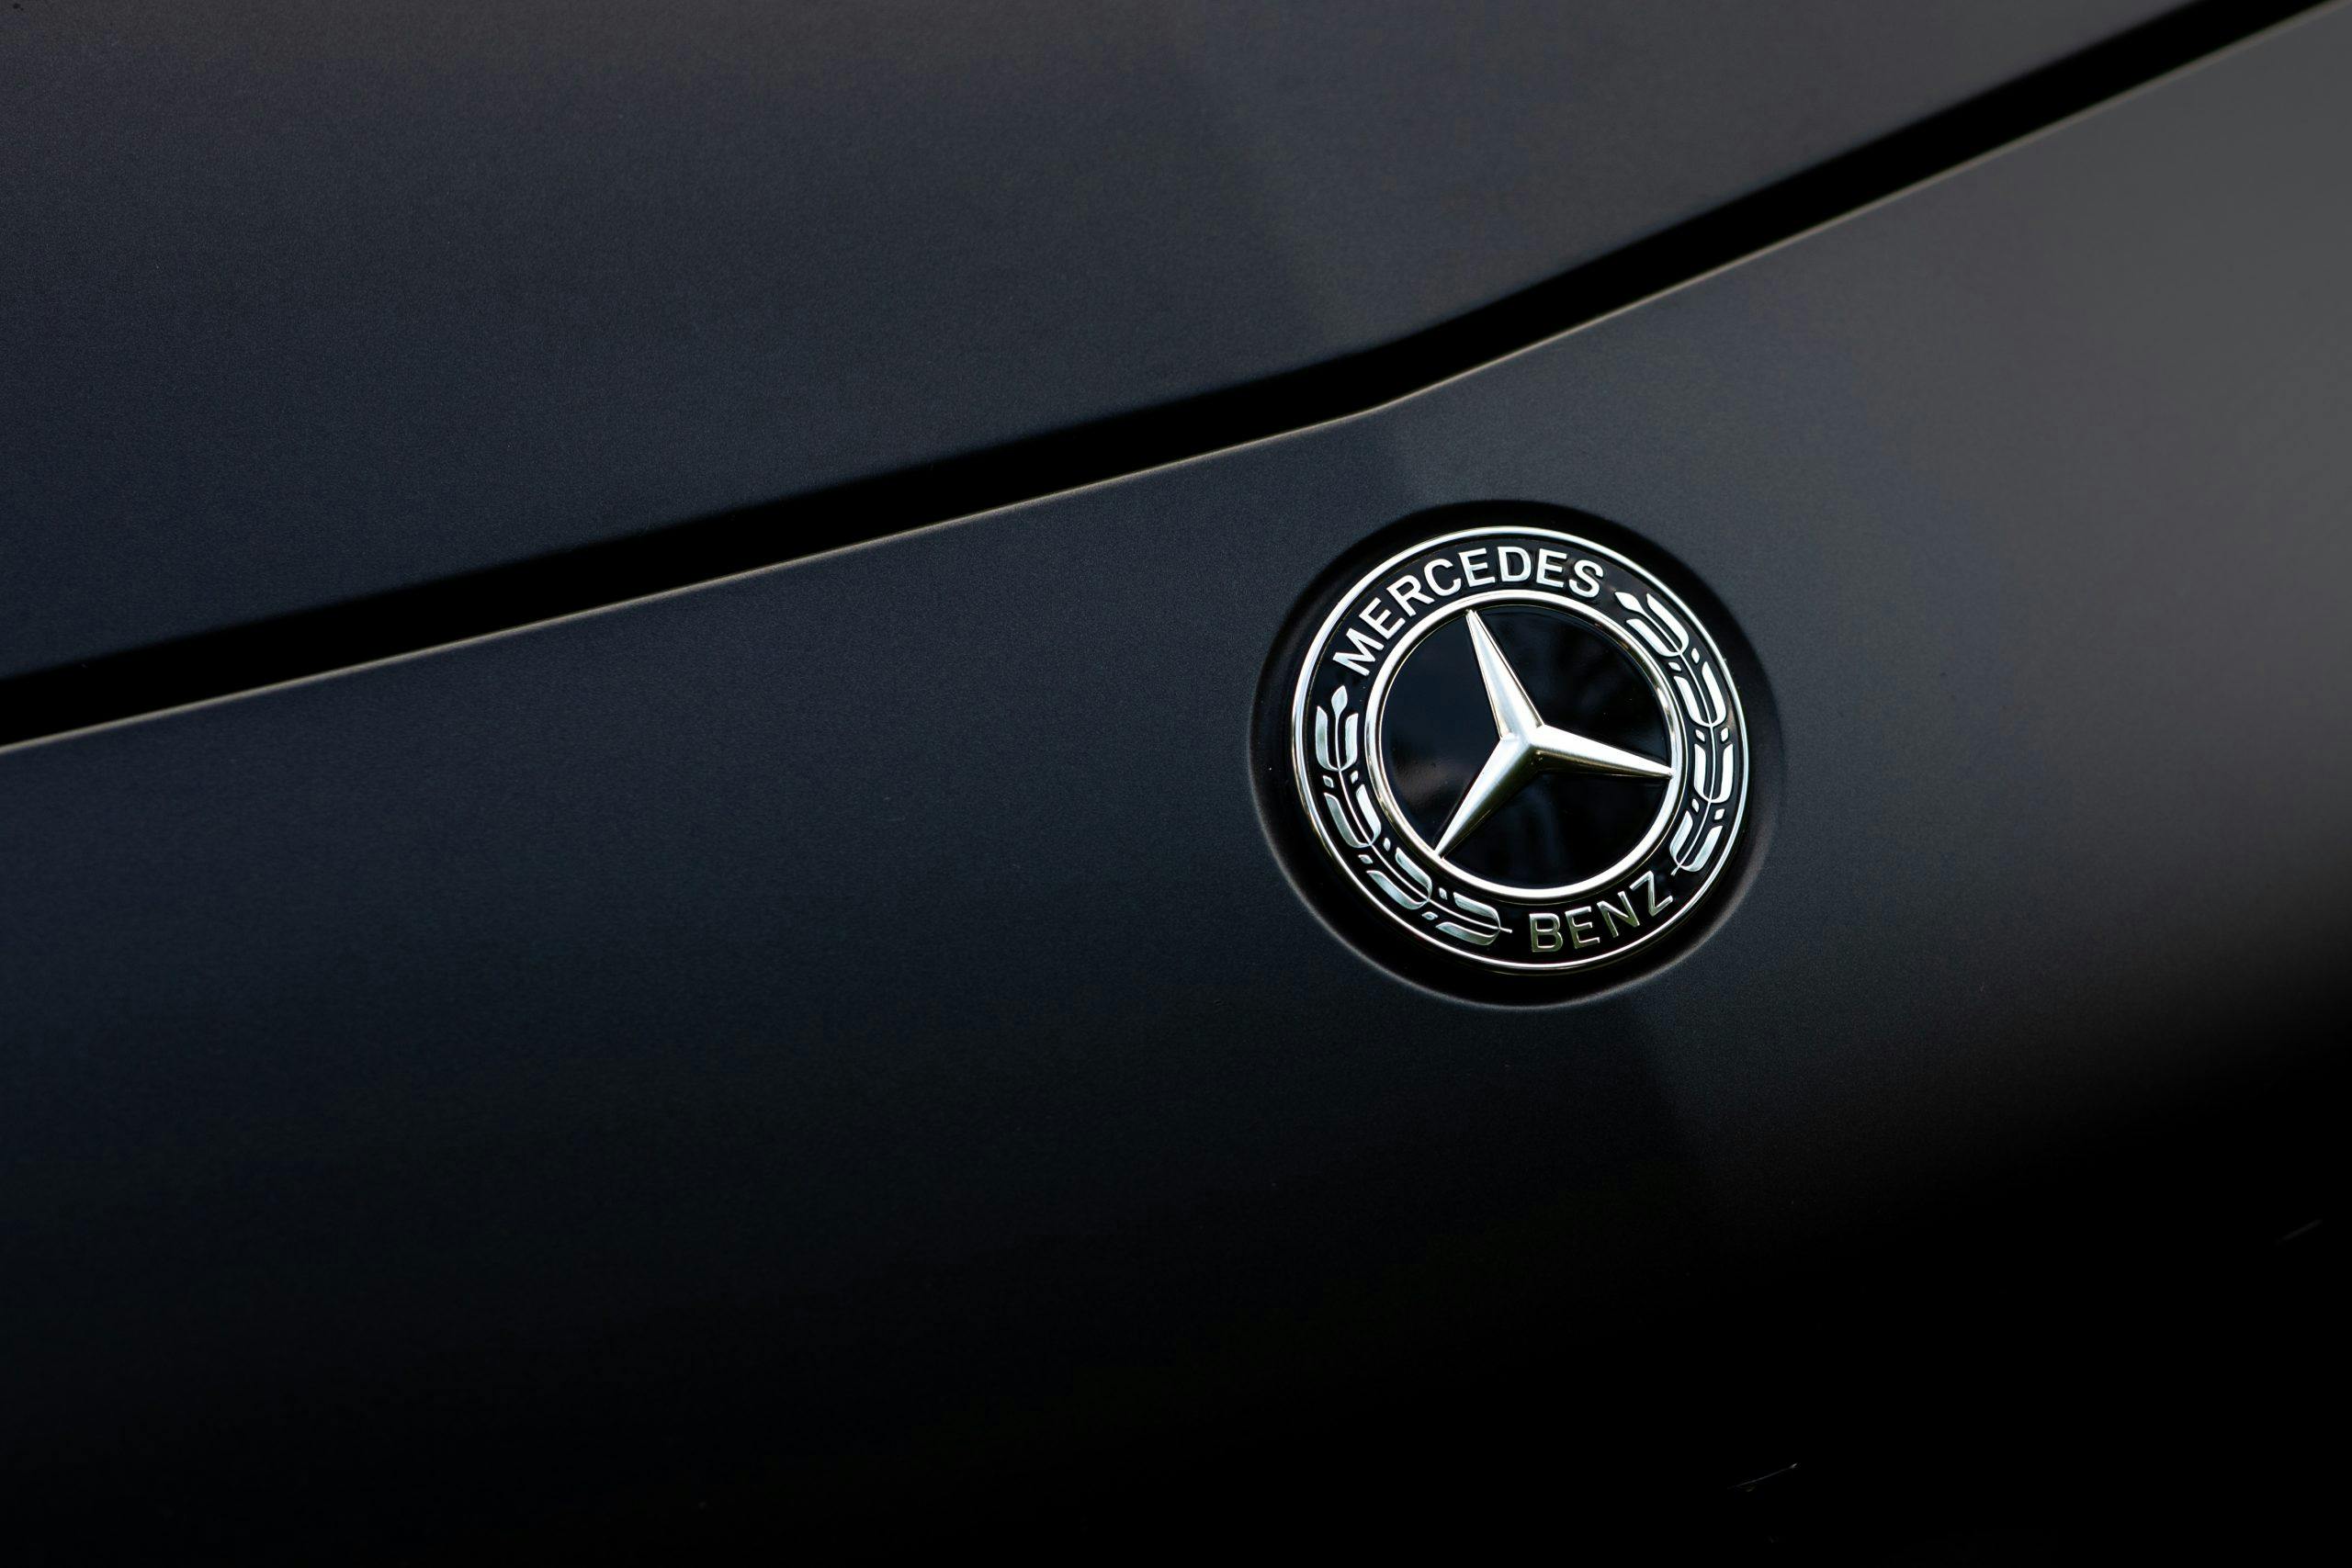 2021 Mercedes-AMG GT Stealth Edition badge logo detail